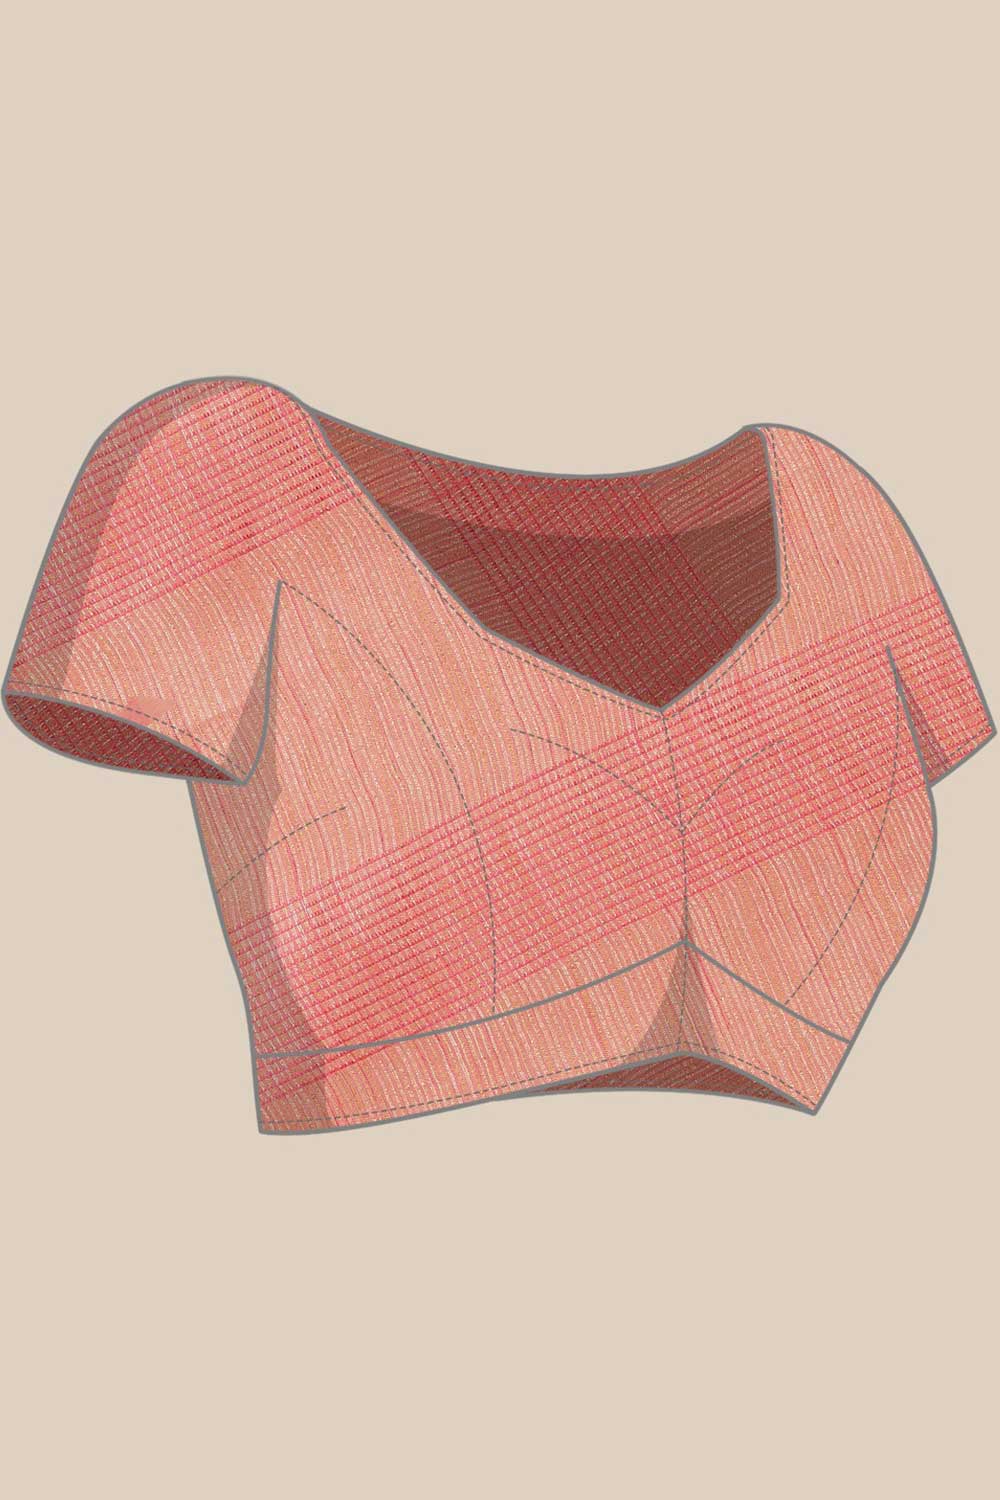 Buy Art Silk Woven Saree in Peach Online - Zoom In